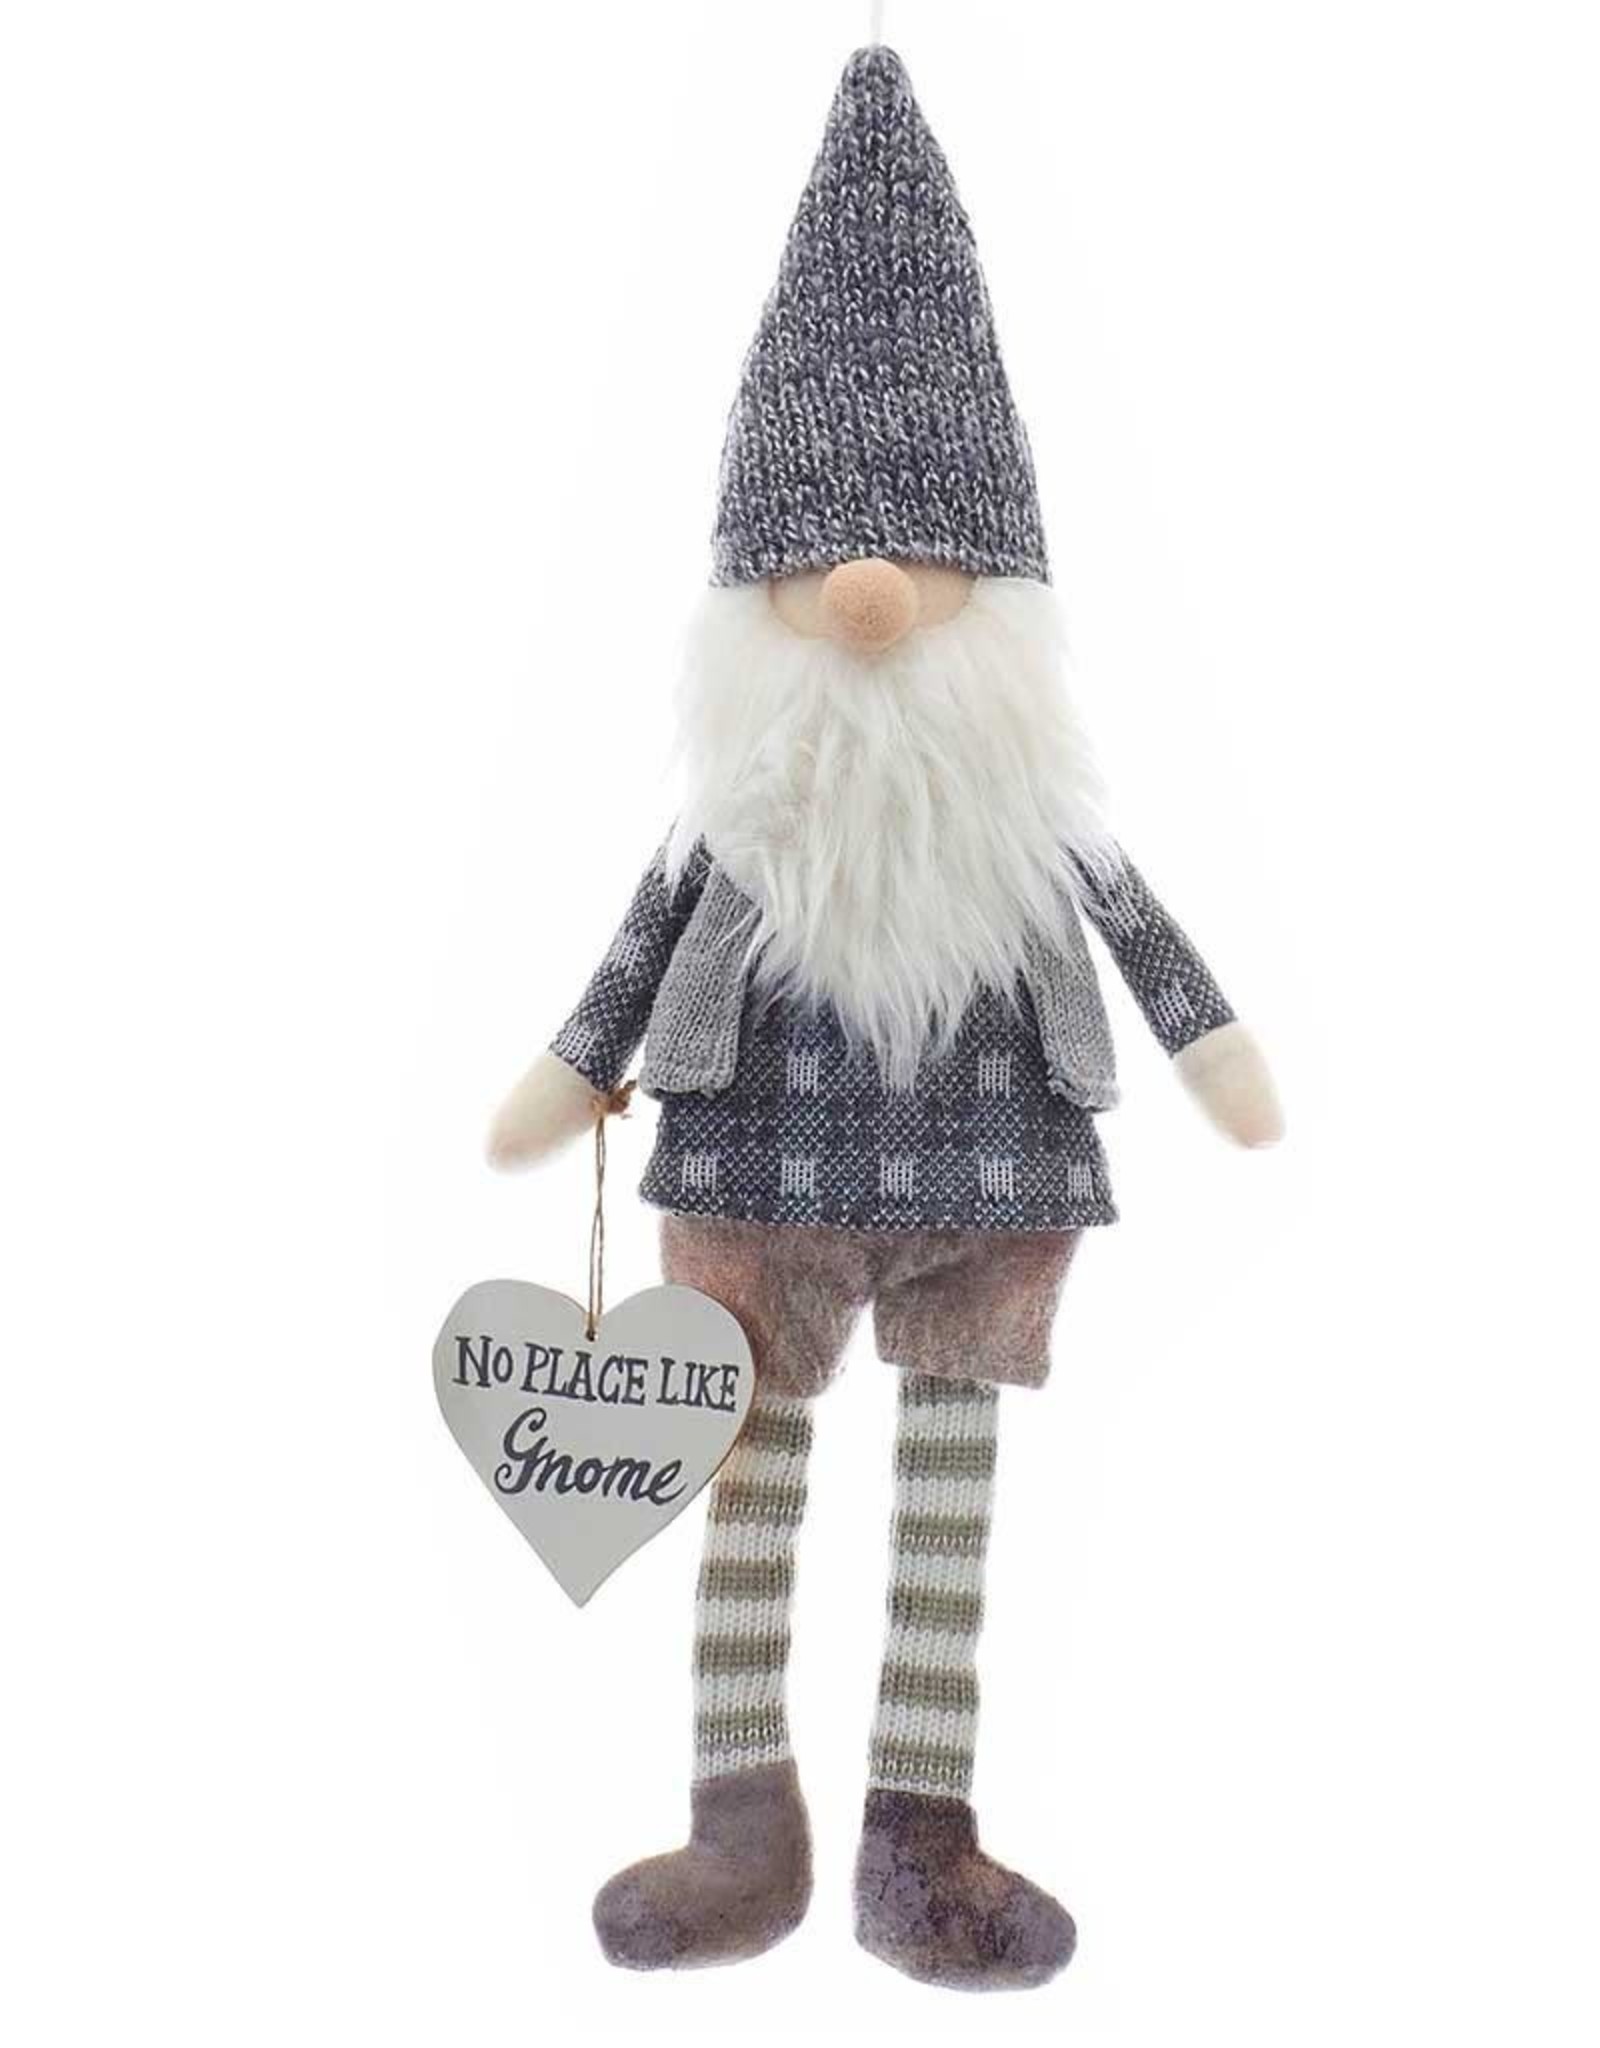 Kurt Adler Gnome Ornament w Heart Sign No Place Like Gnome